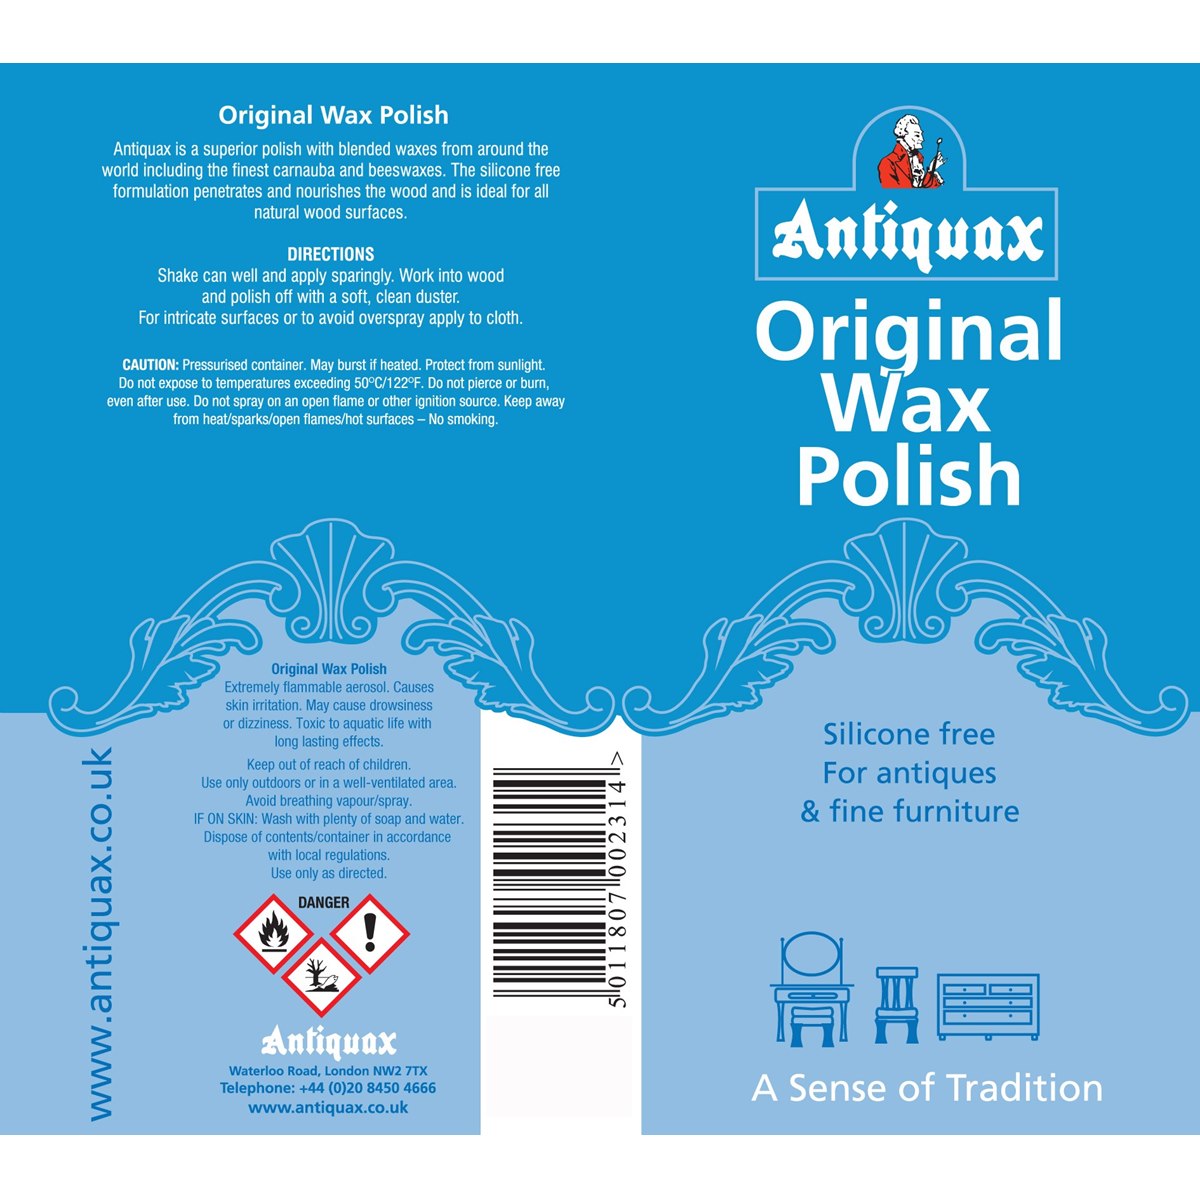 Where to buy Antiquax Original Wax Polish